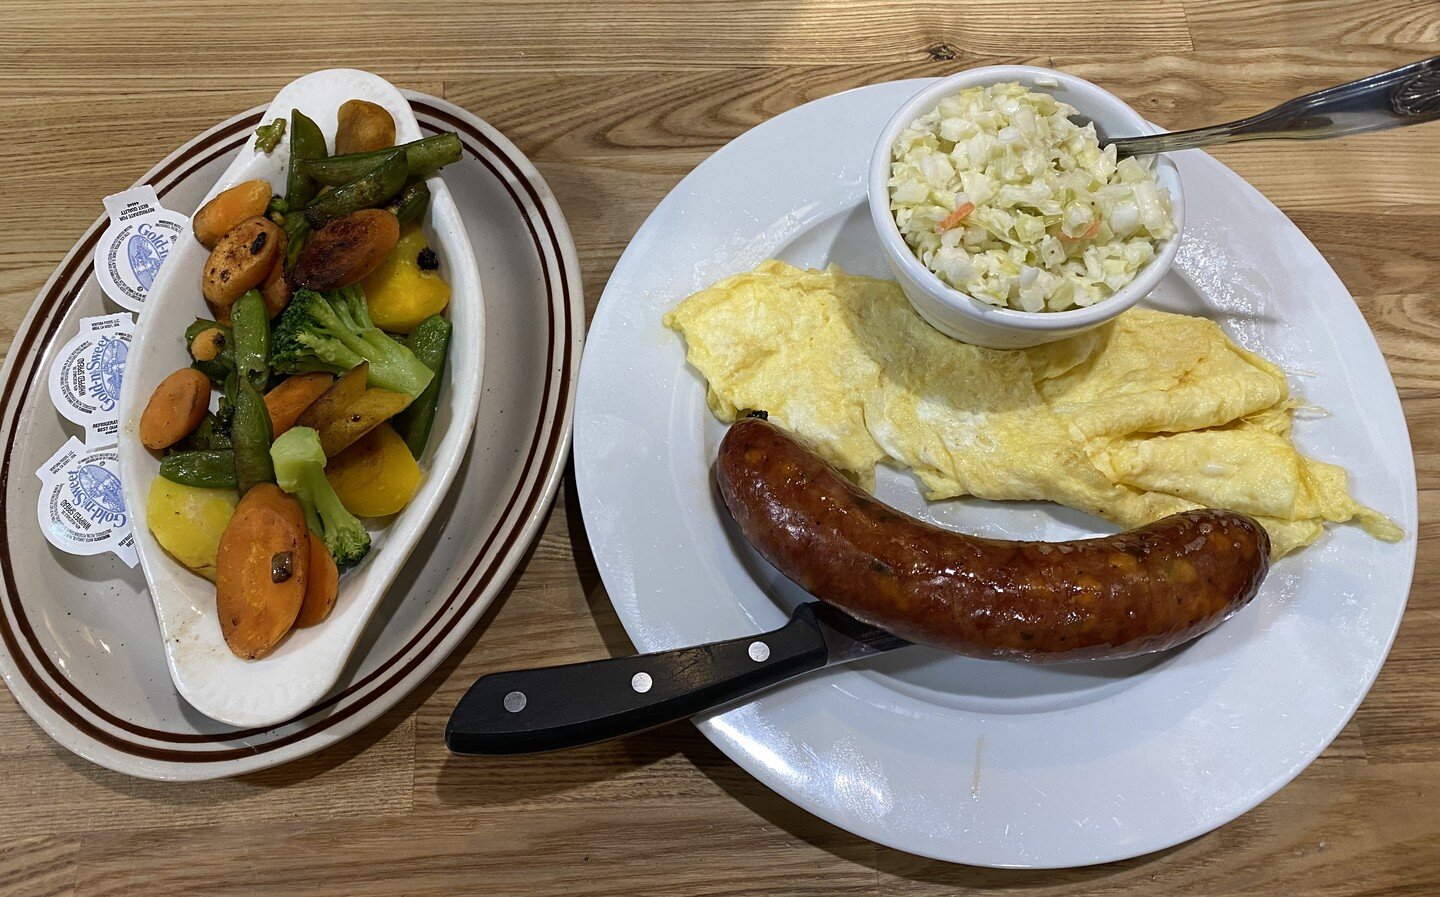 hearty #montana #lunch #bratwurst #eggs #slaw #grilledveggies #hangingfivefamilyrestaurant #butte #brunch #food #placesiveeaten